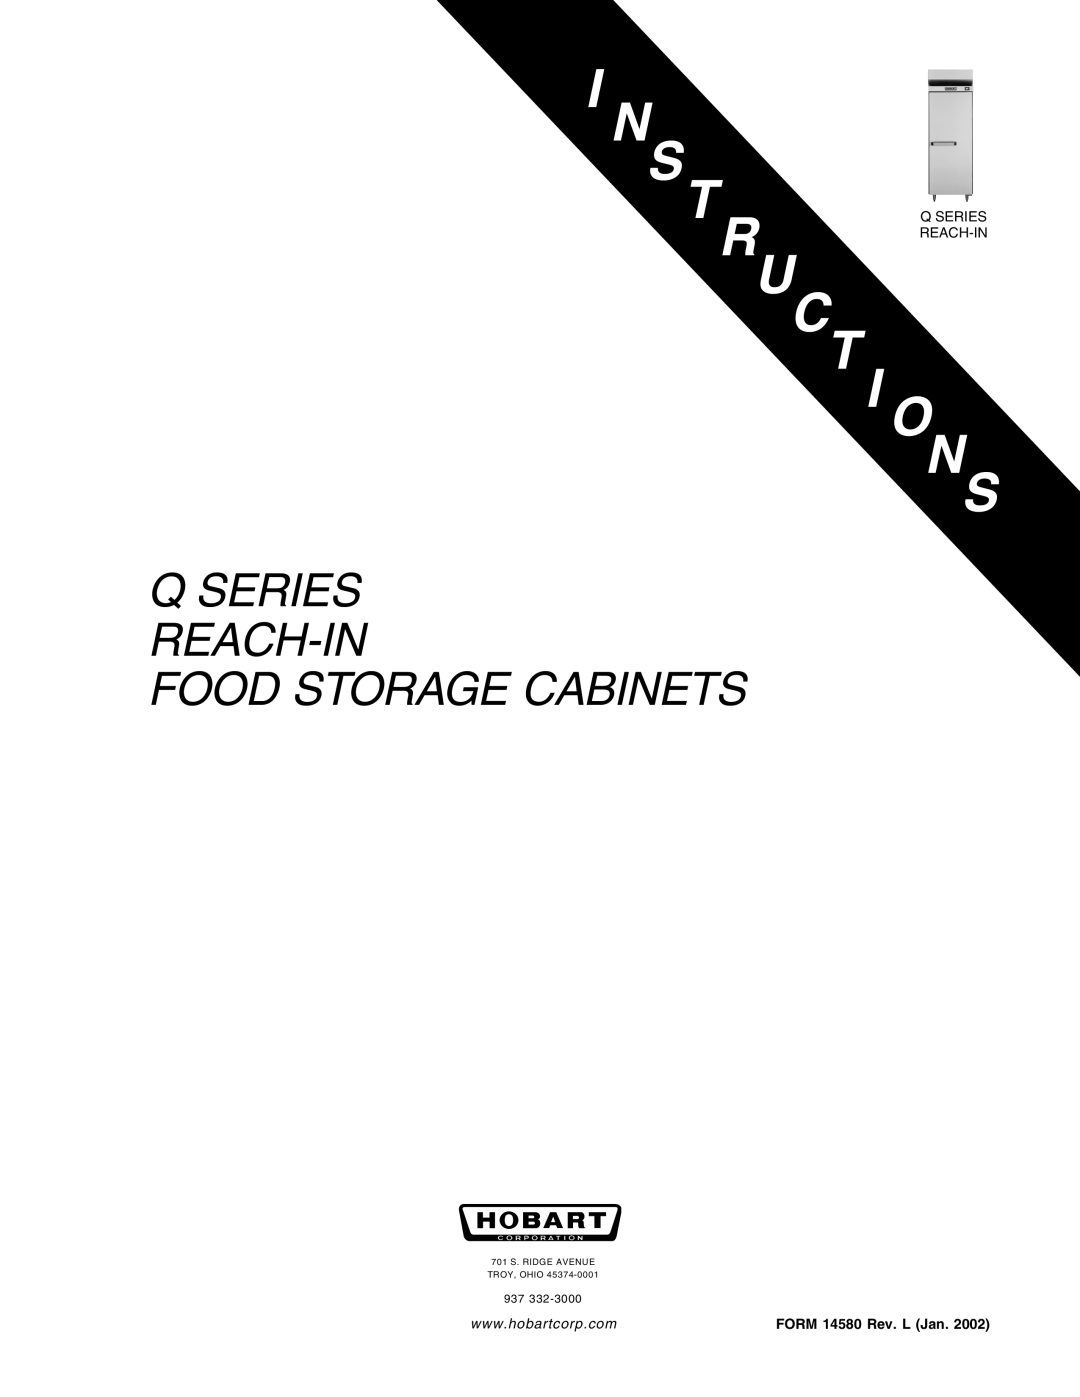 Hobart manual Ru C T I O, Q Series Reach-In Food Storage Cabinets, FORM 14580 Rev. L Jan 